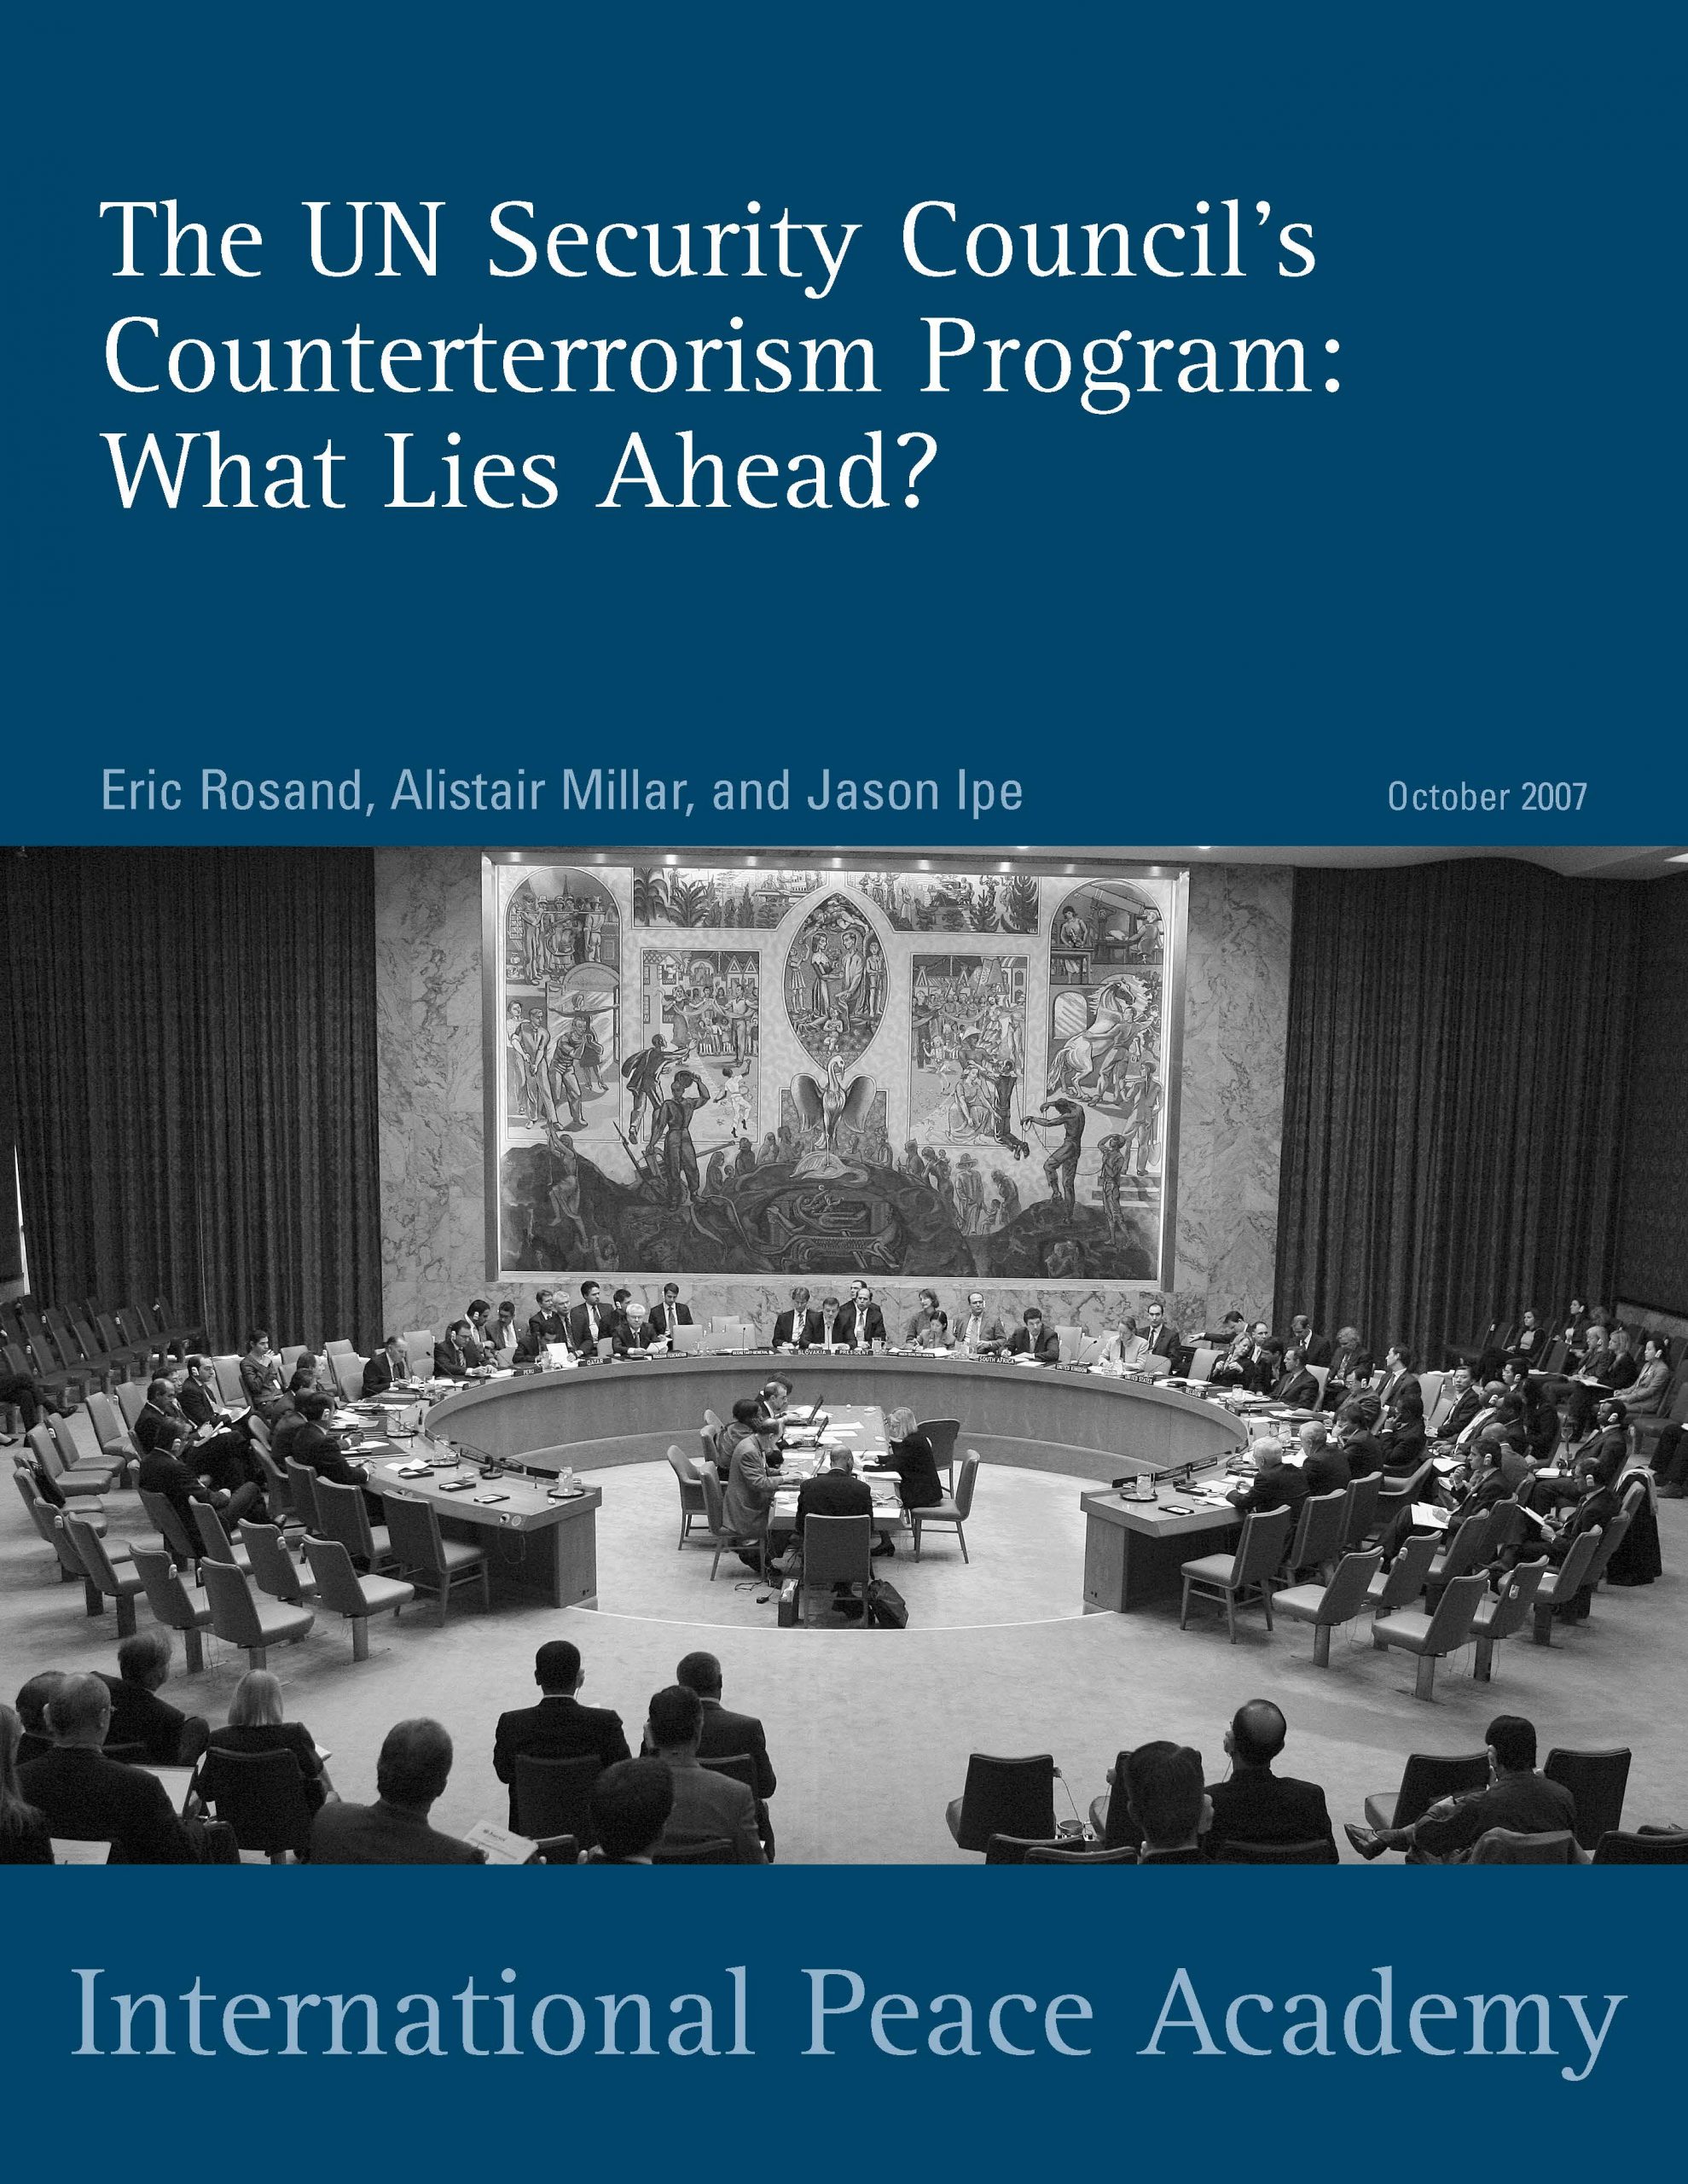 The UN Security Council’s Counterterrorism Program: What Lies Ahead?